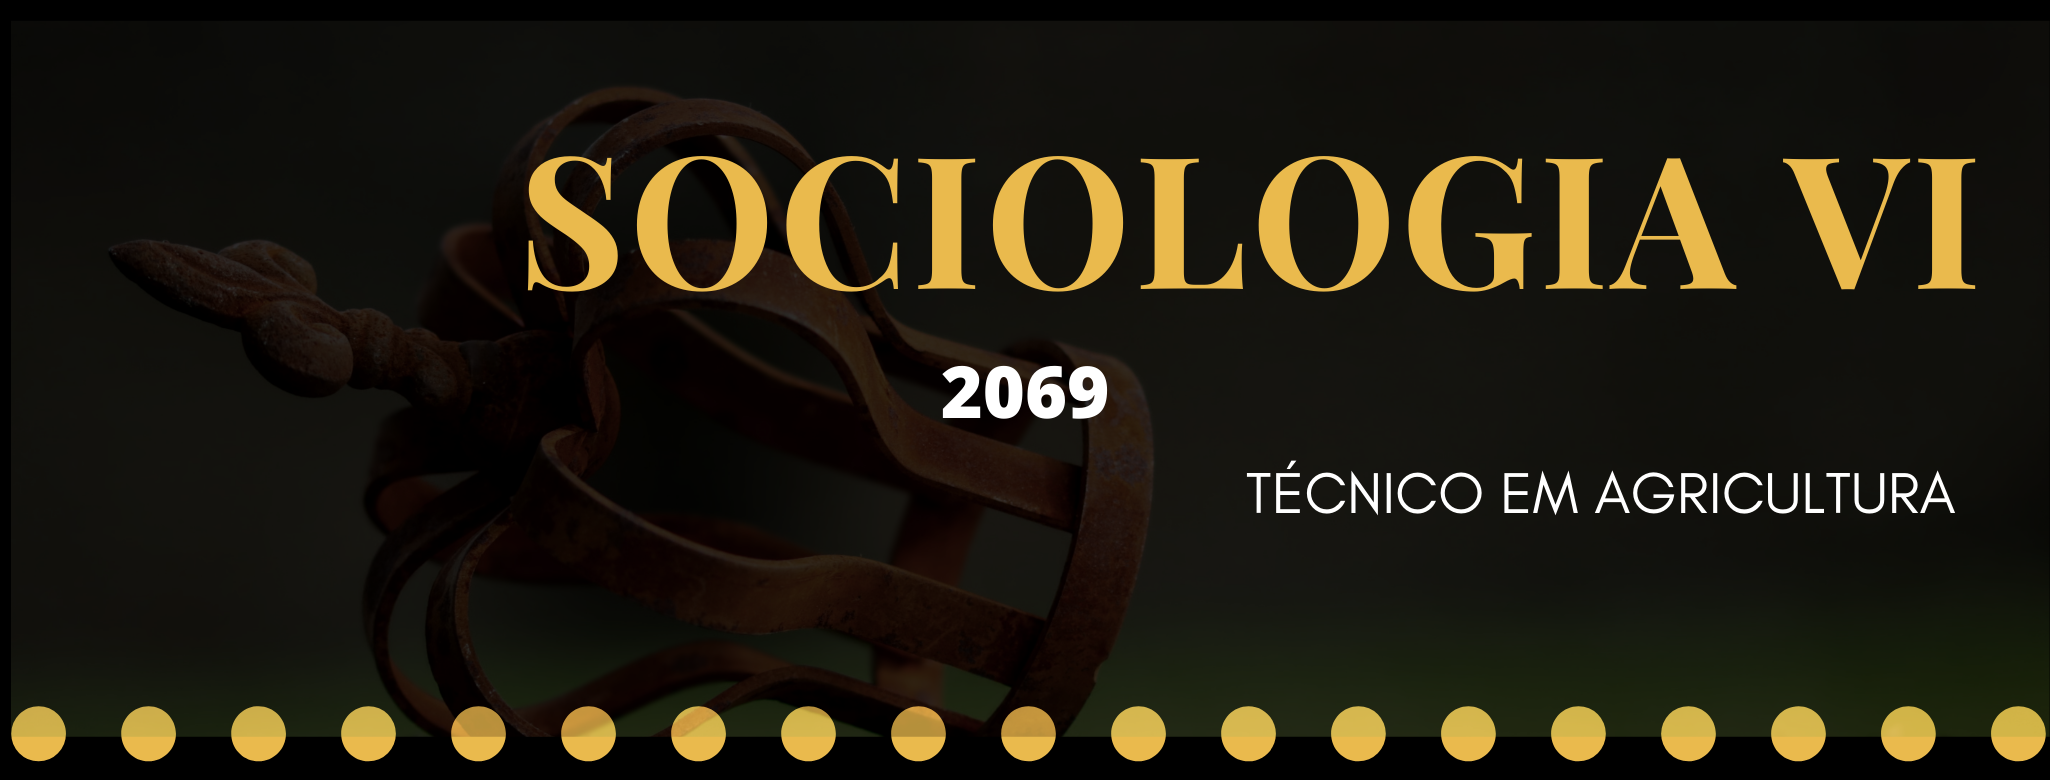 SOCIOLOGIA 6 - 2069